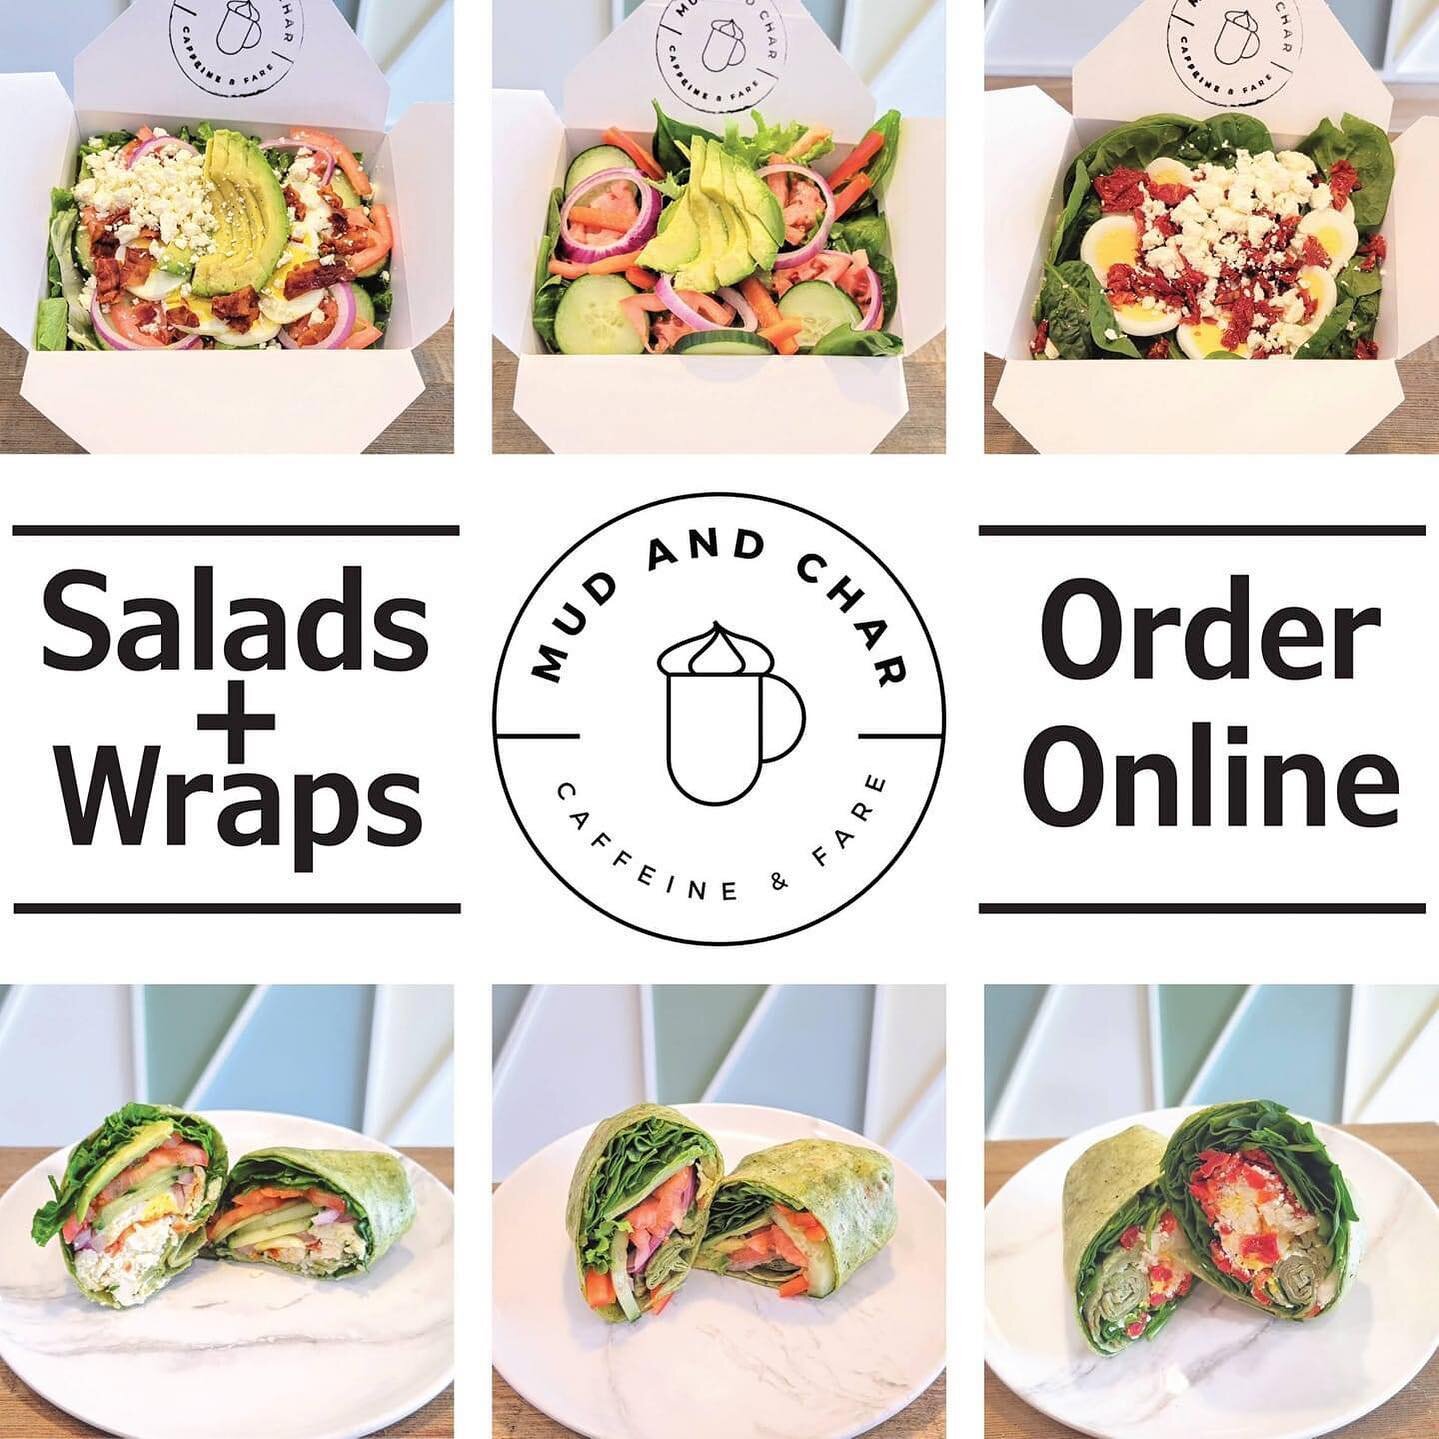 NEW!!! Salads and Wraps
🥗🥗🥗🥗🥗🥗🥗🥗🥗
Cobb / Garden / Power
#MudAndChar #DrinkMud #DrinkChar 
#DownersGrove #Lisle #Woodridge #Naperville #GlenEllyn